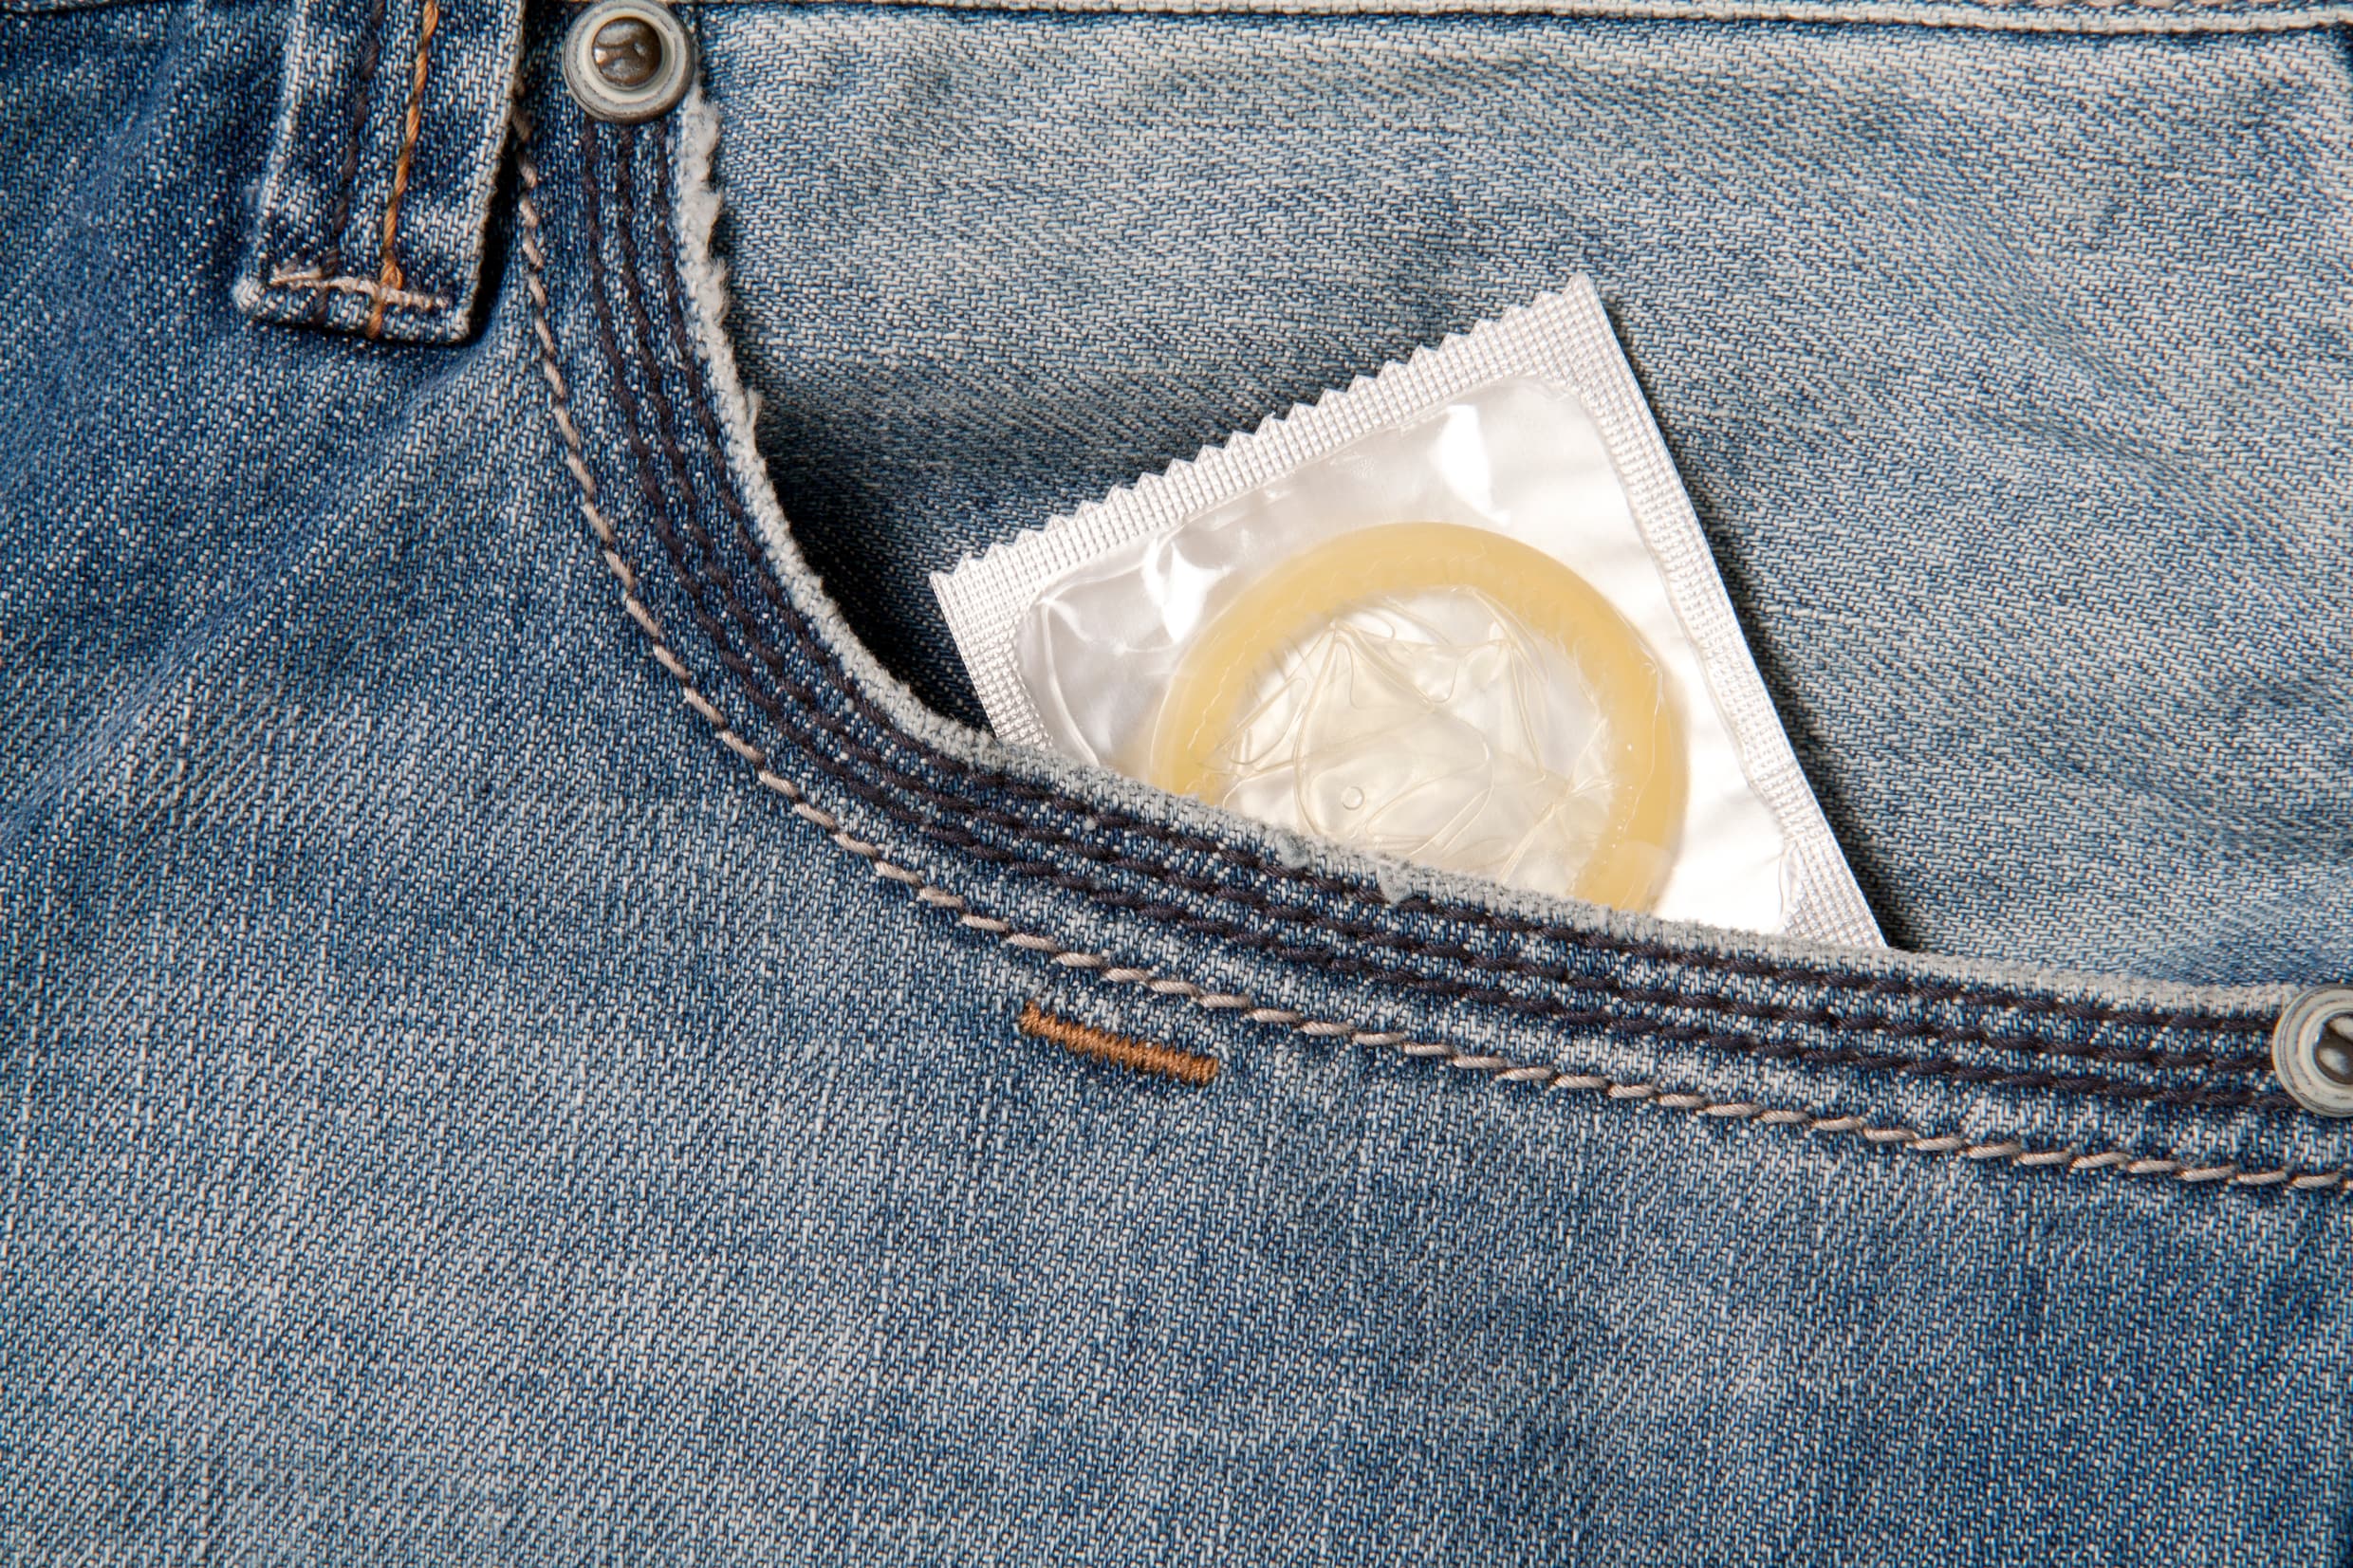 ‘Mensen laten condooms vaak achterwege’: epidemioloog over toename van chlamydia, gonorroe en syfilis